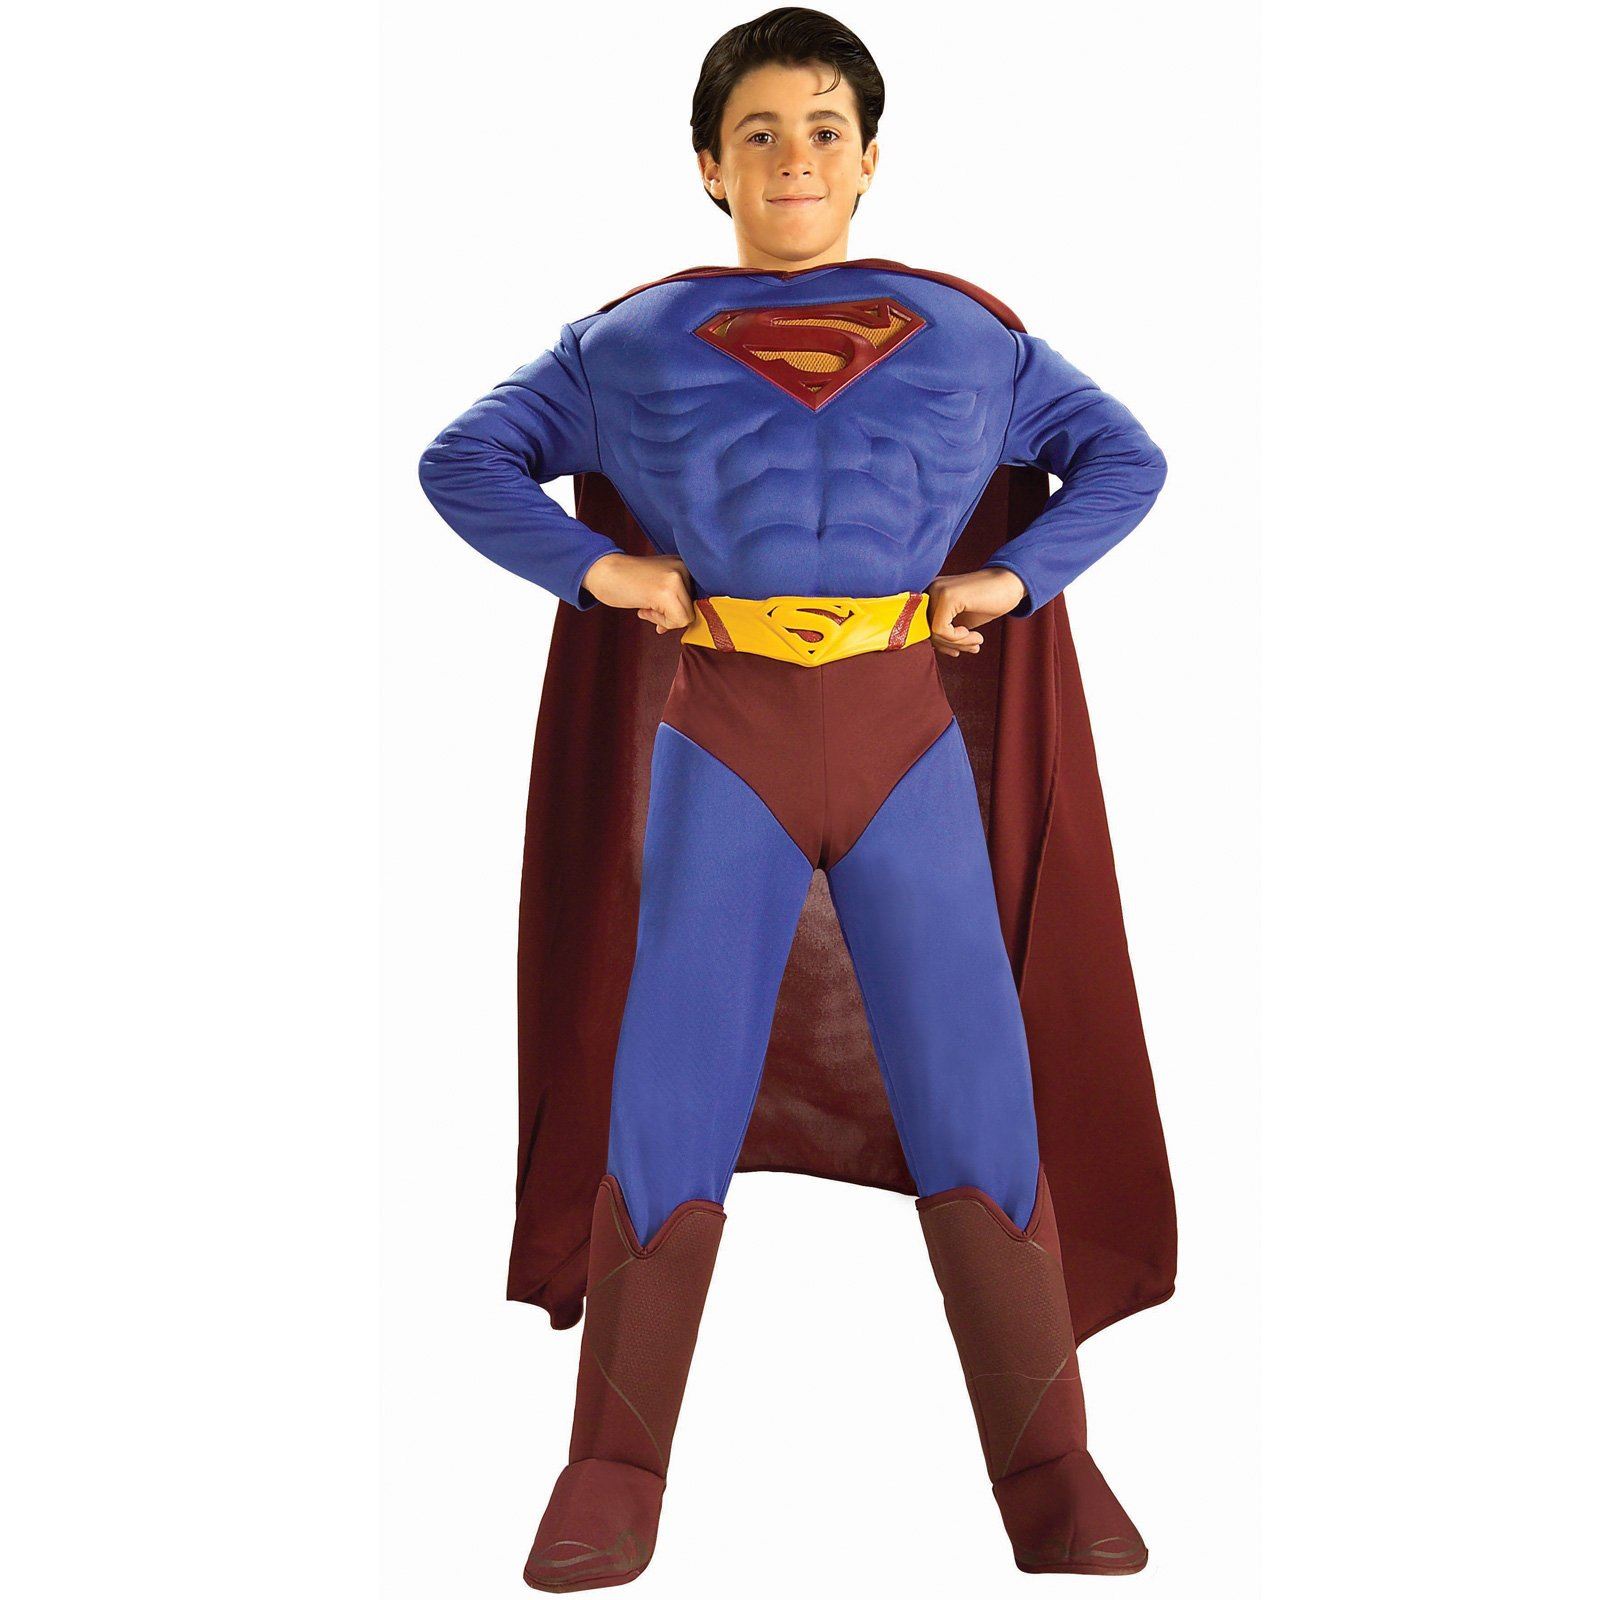 Image result for superman returns boys costume